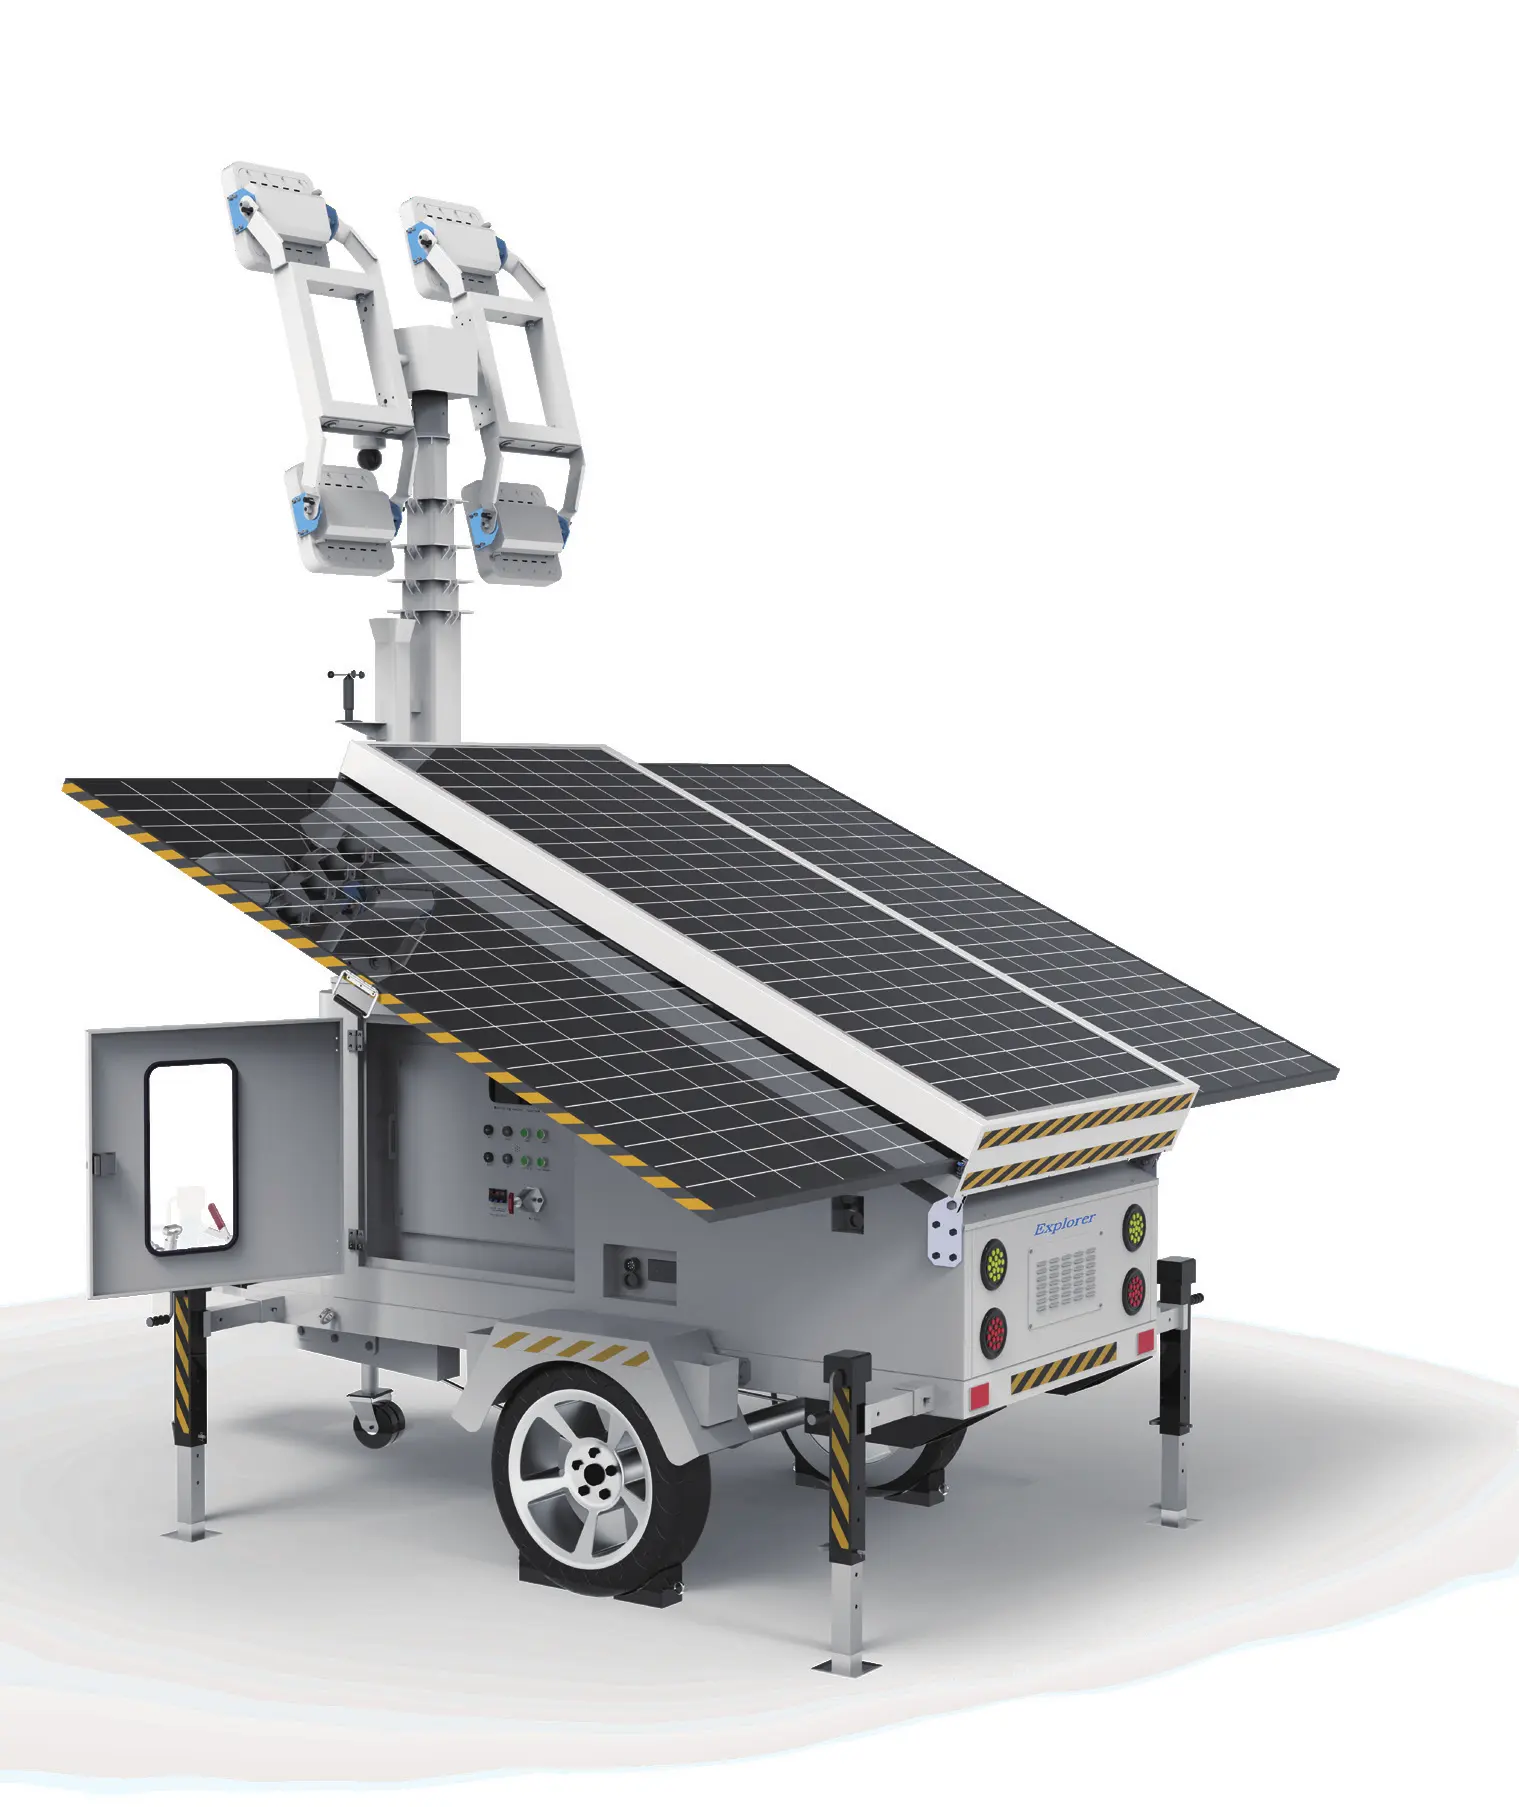 3x460W Multi-pupose มือถือพลังงานแสงอาทิตย์Towerรถพ่วงติดตั้งพลังงานแสงอาทิตย์ LEDโคมไฟมือถือTower 9mHeight